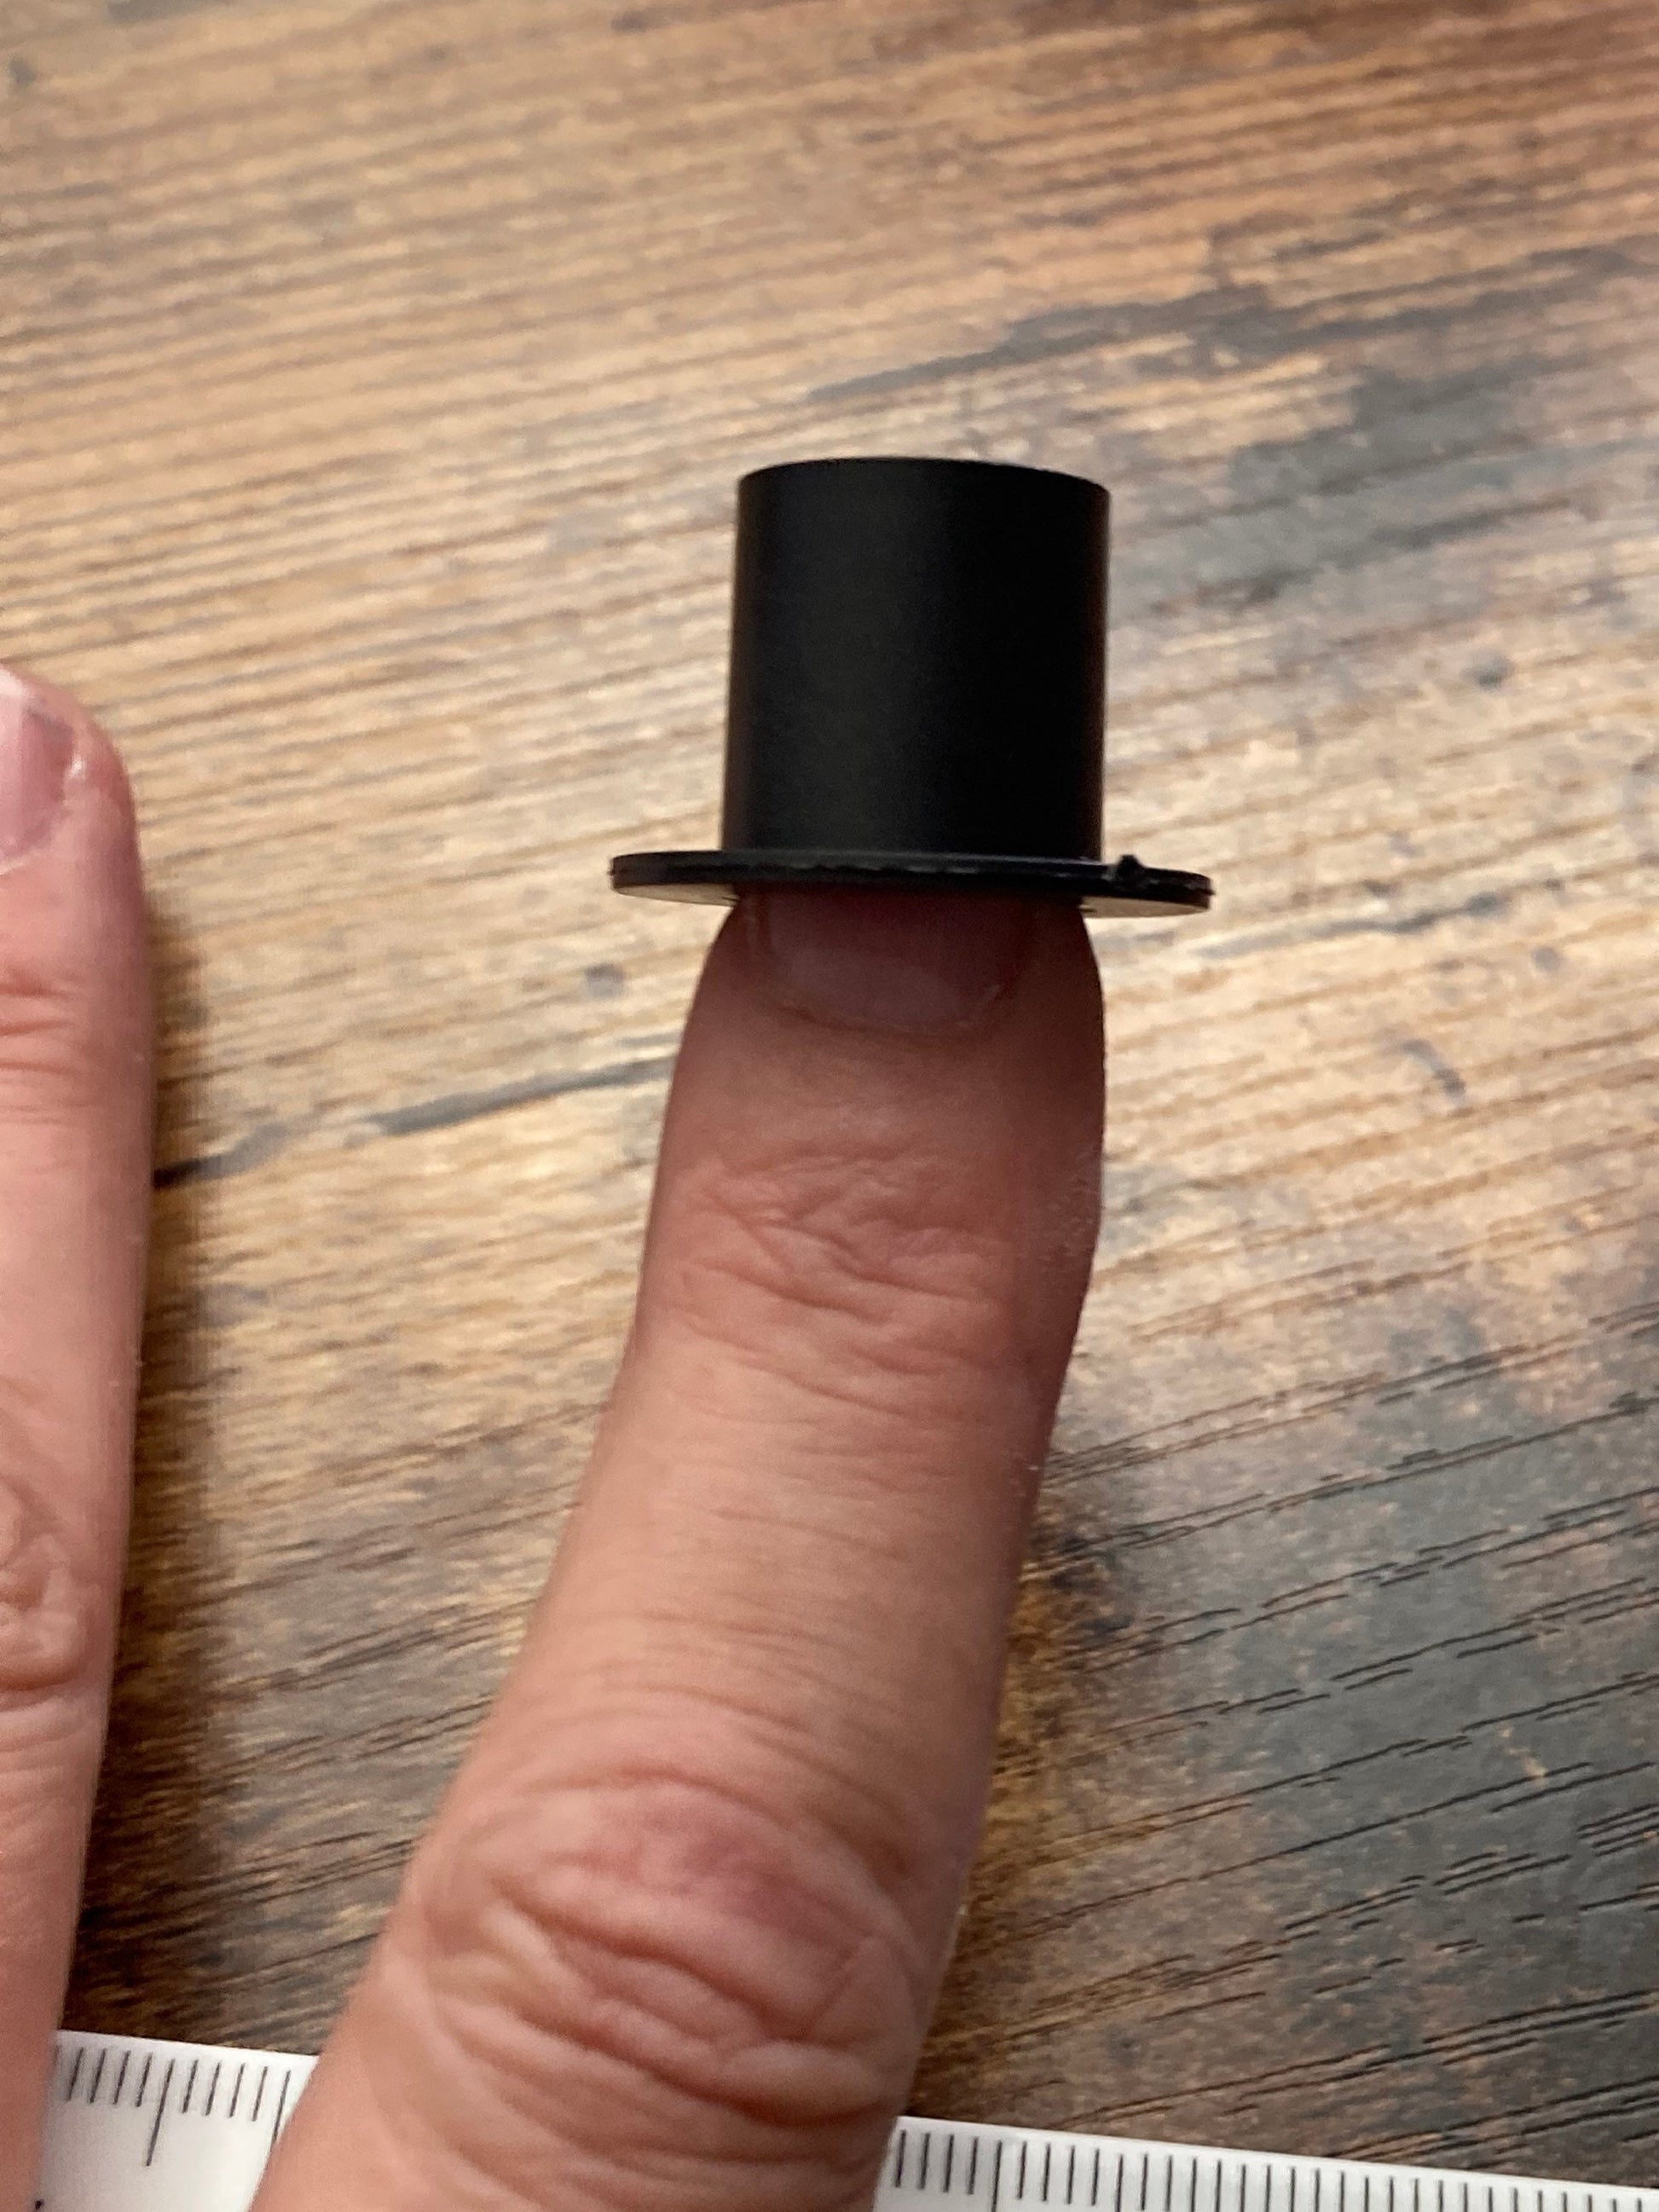 Small Miniature black plastic top hat sugar craft Wedding groom cake topper